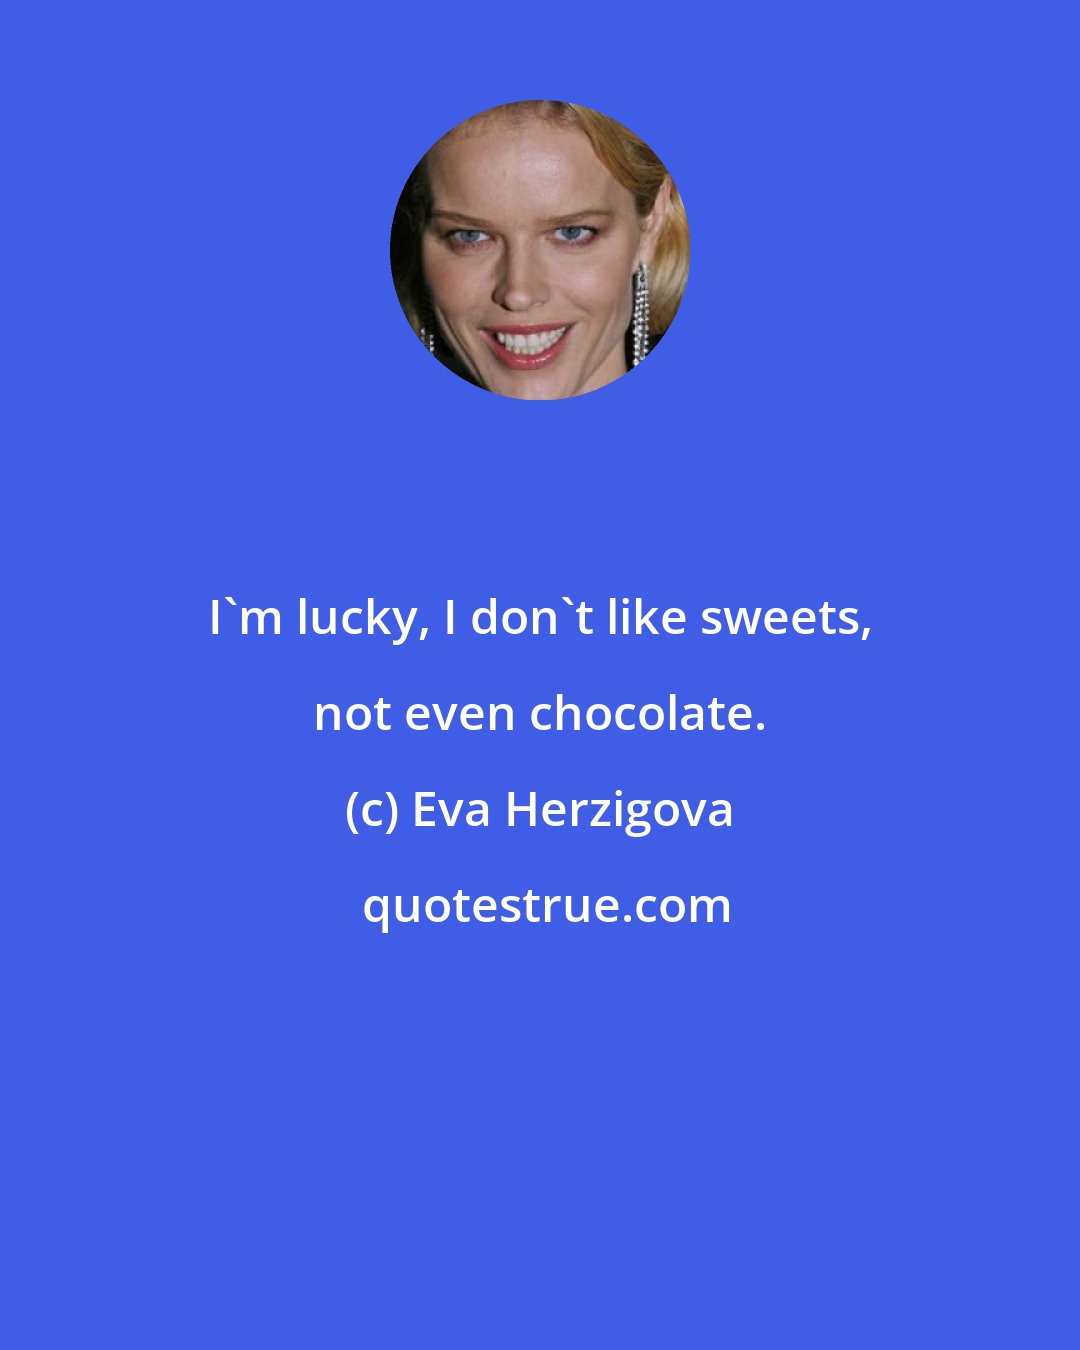 Eva Herzigova: I'm lucky, I don't like sweets, not even chocolate.